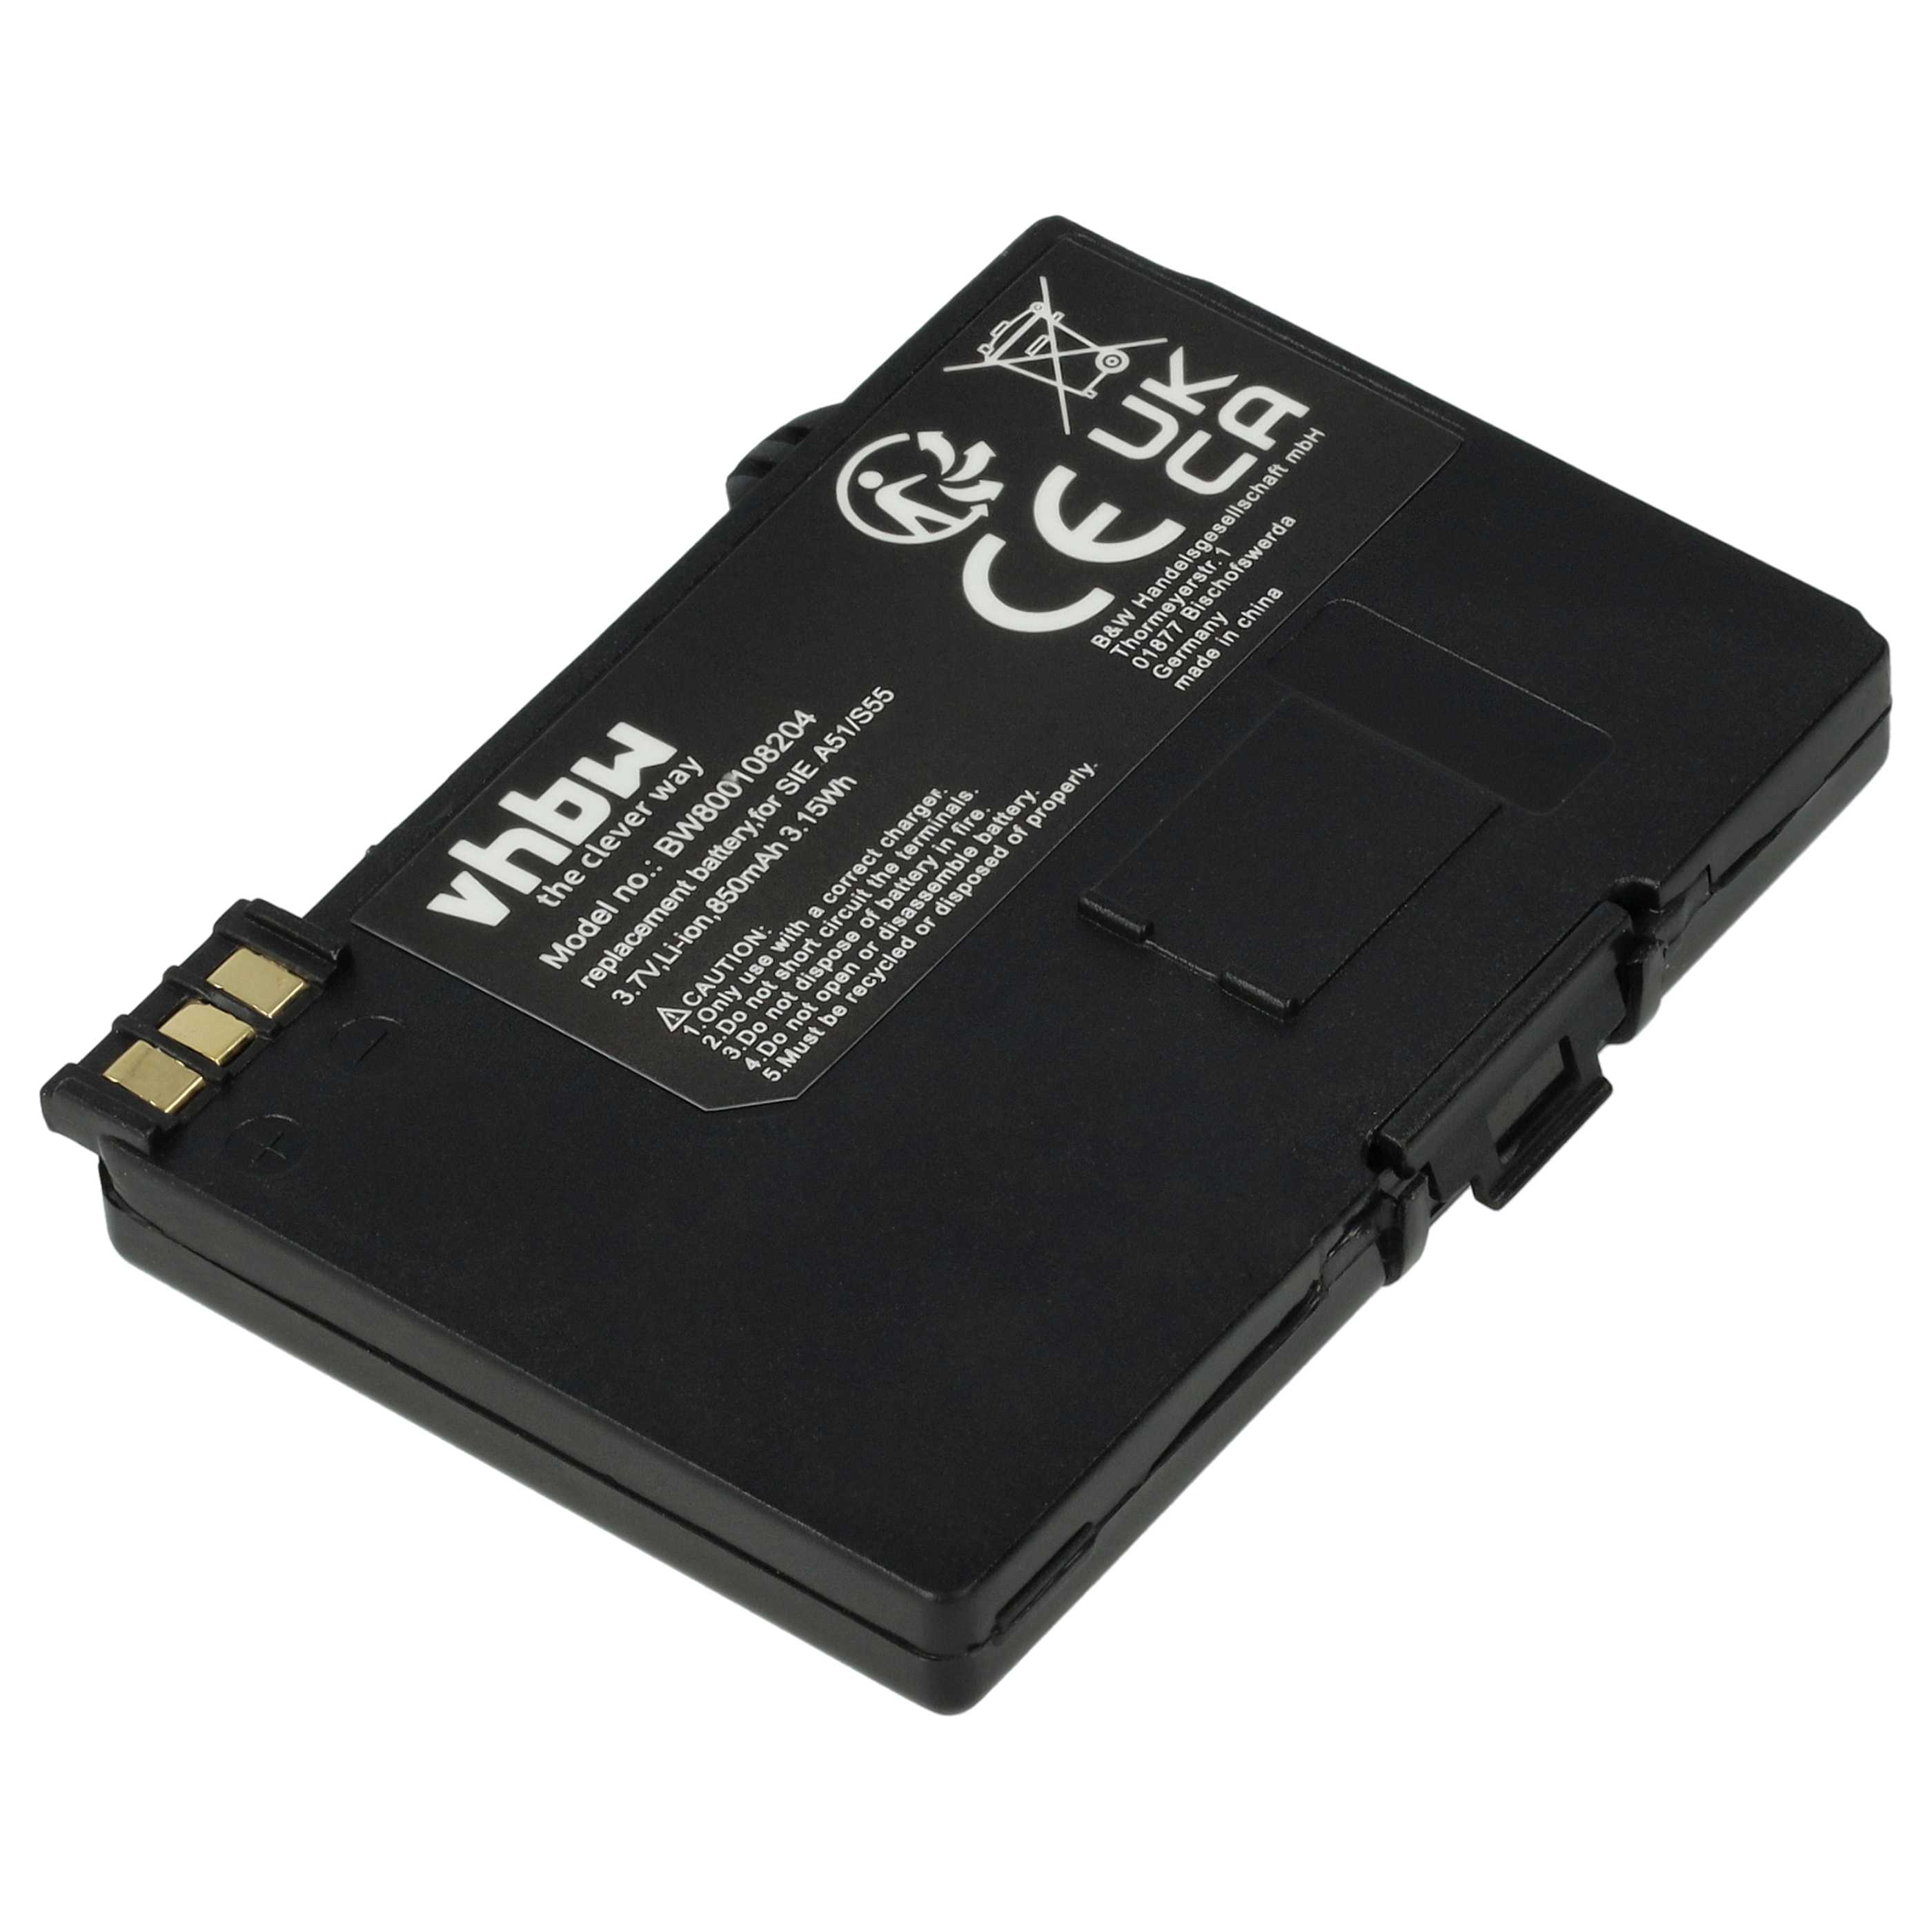 Landline Phone Battery Replacement for EBA-510, L36145-K1310-X401, BASIC56 - 850mAh 3.7V Li-Ion